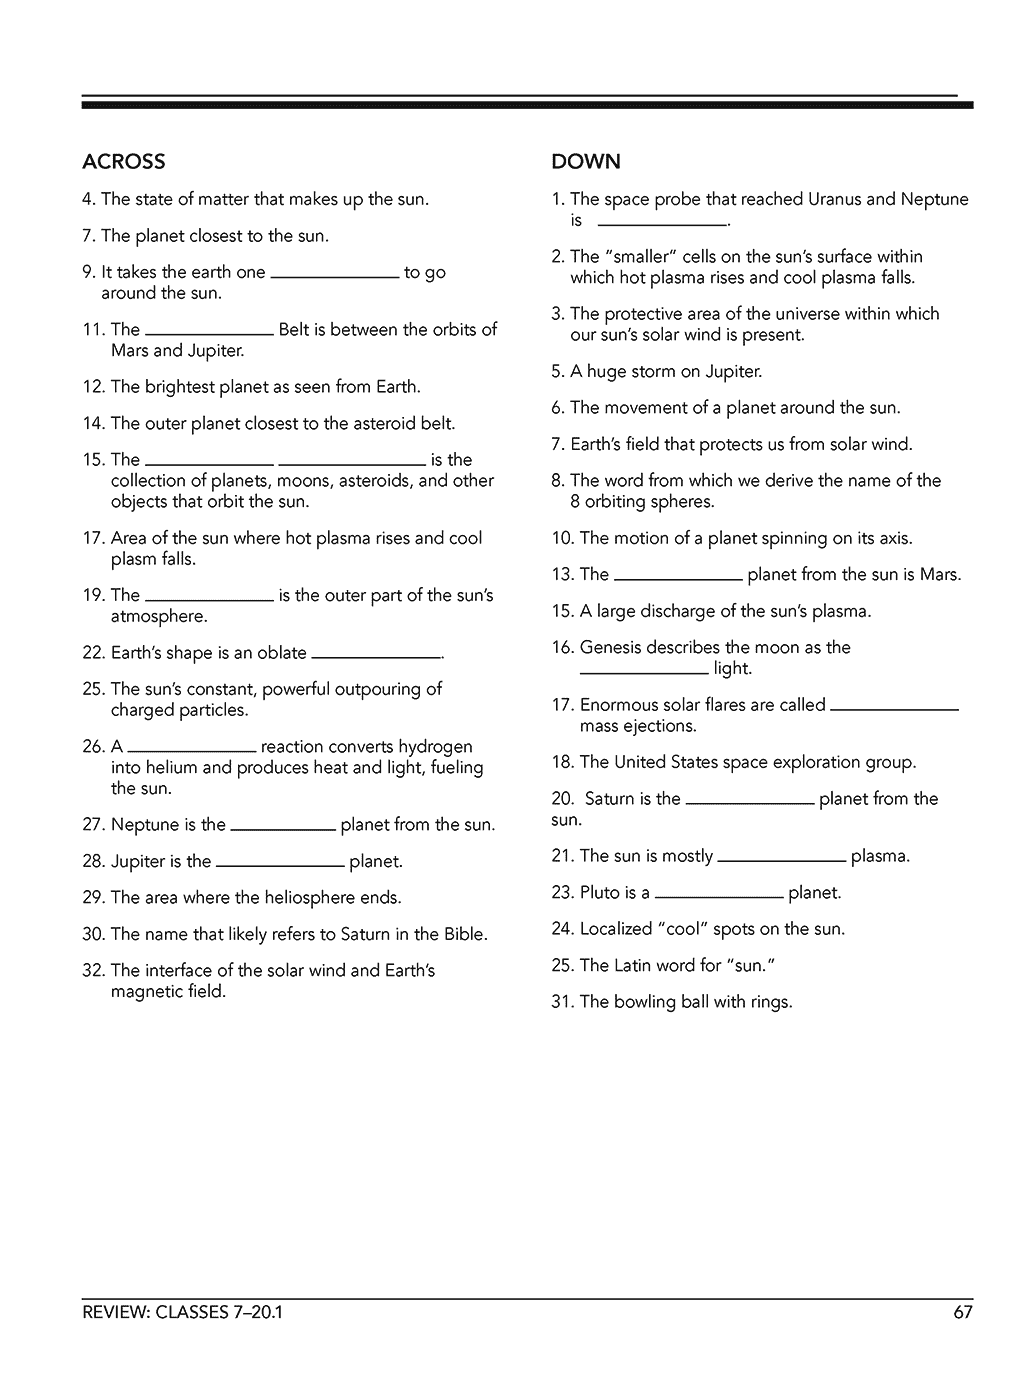 Workbook Level B for Homeschool Earth Science Curriculum